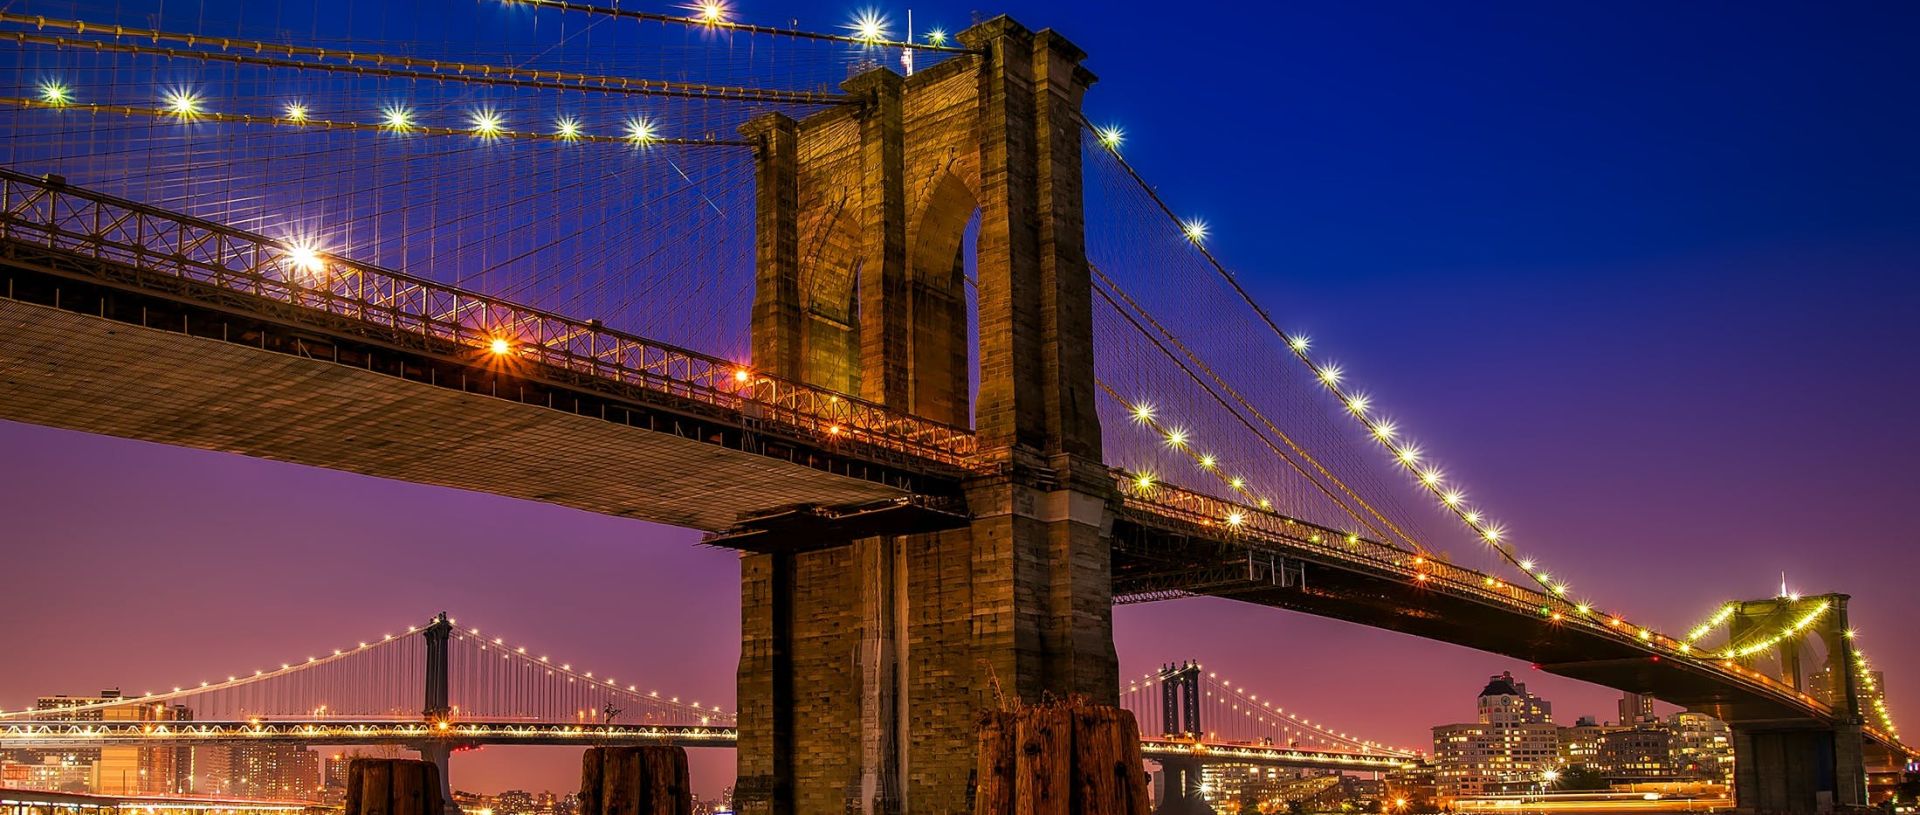 Brooklyn Bridge, New York during Nighttime